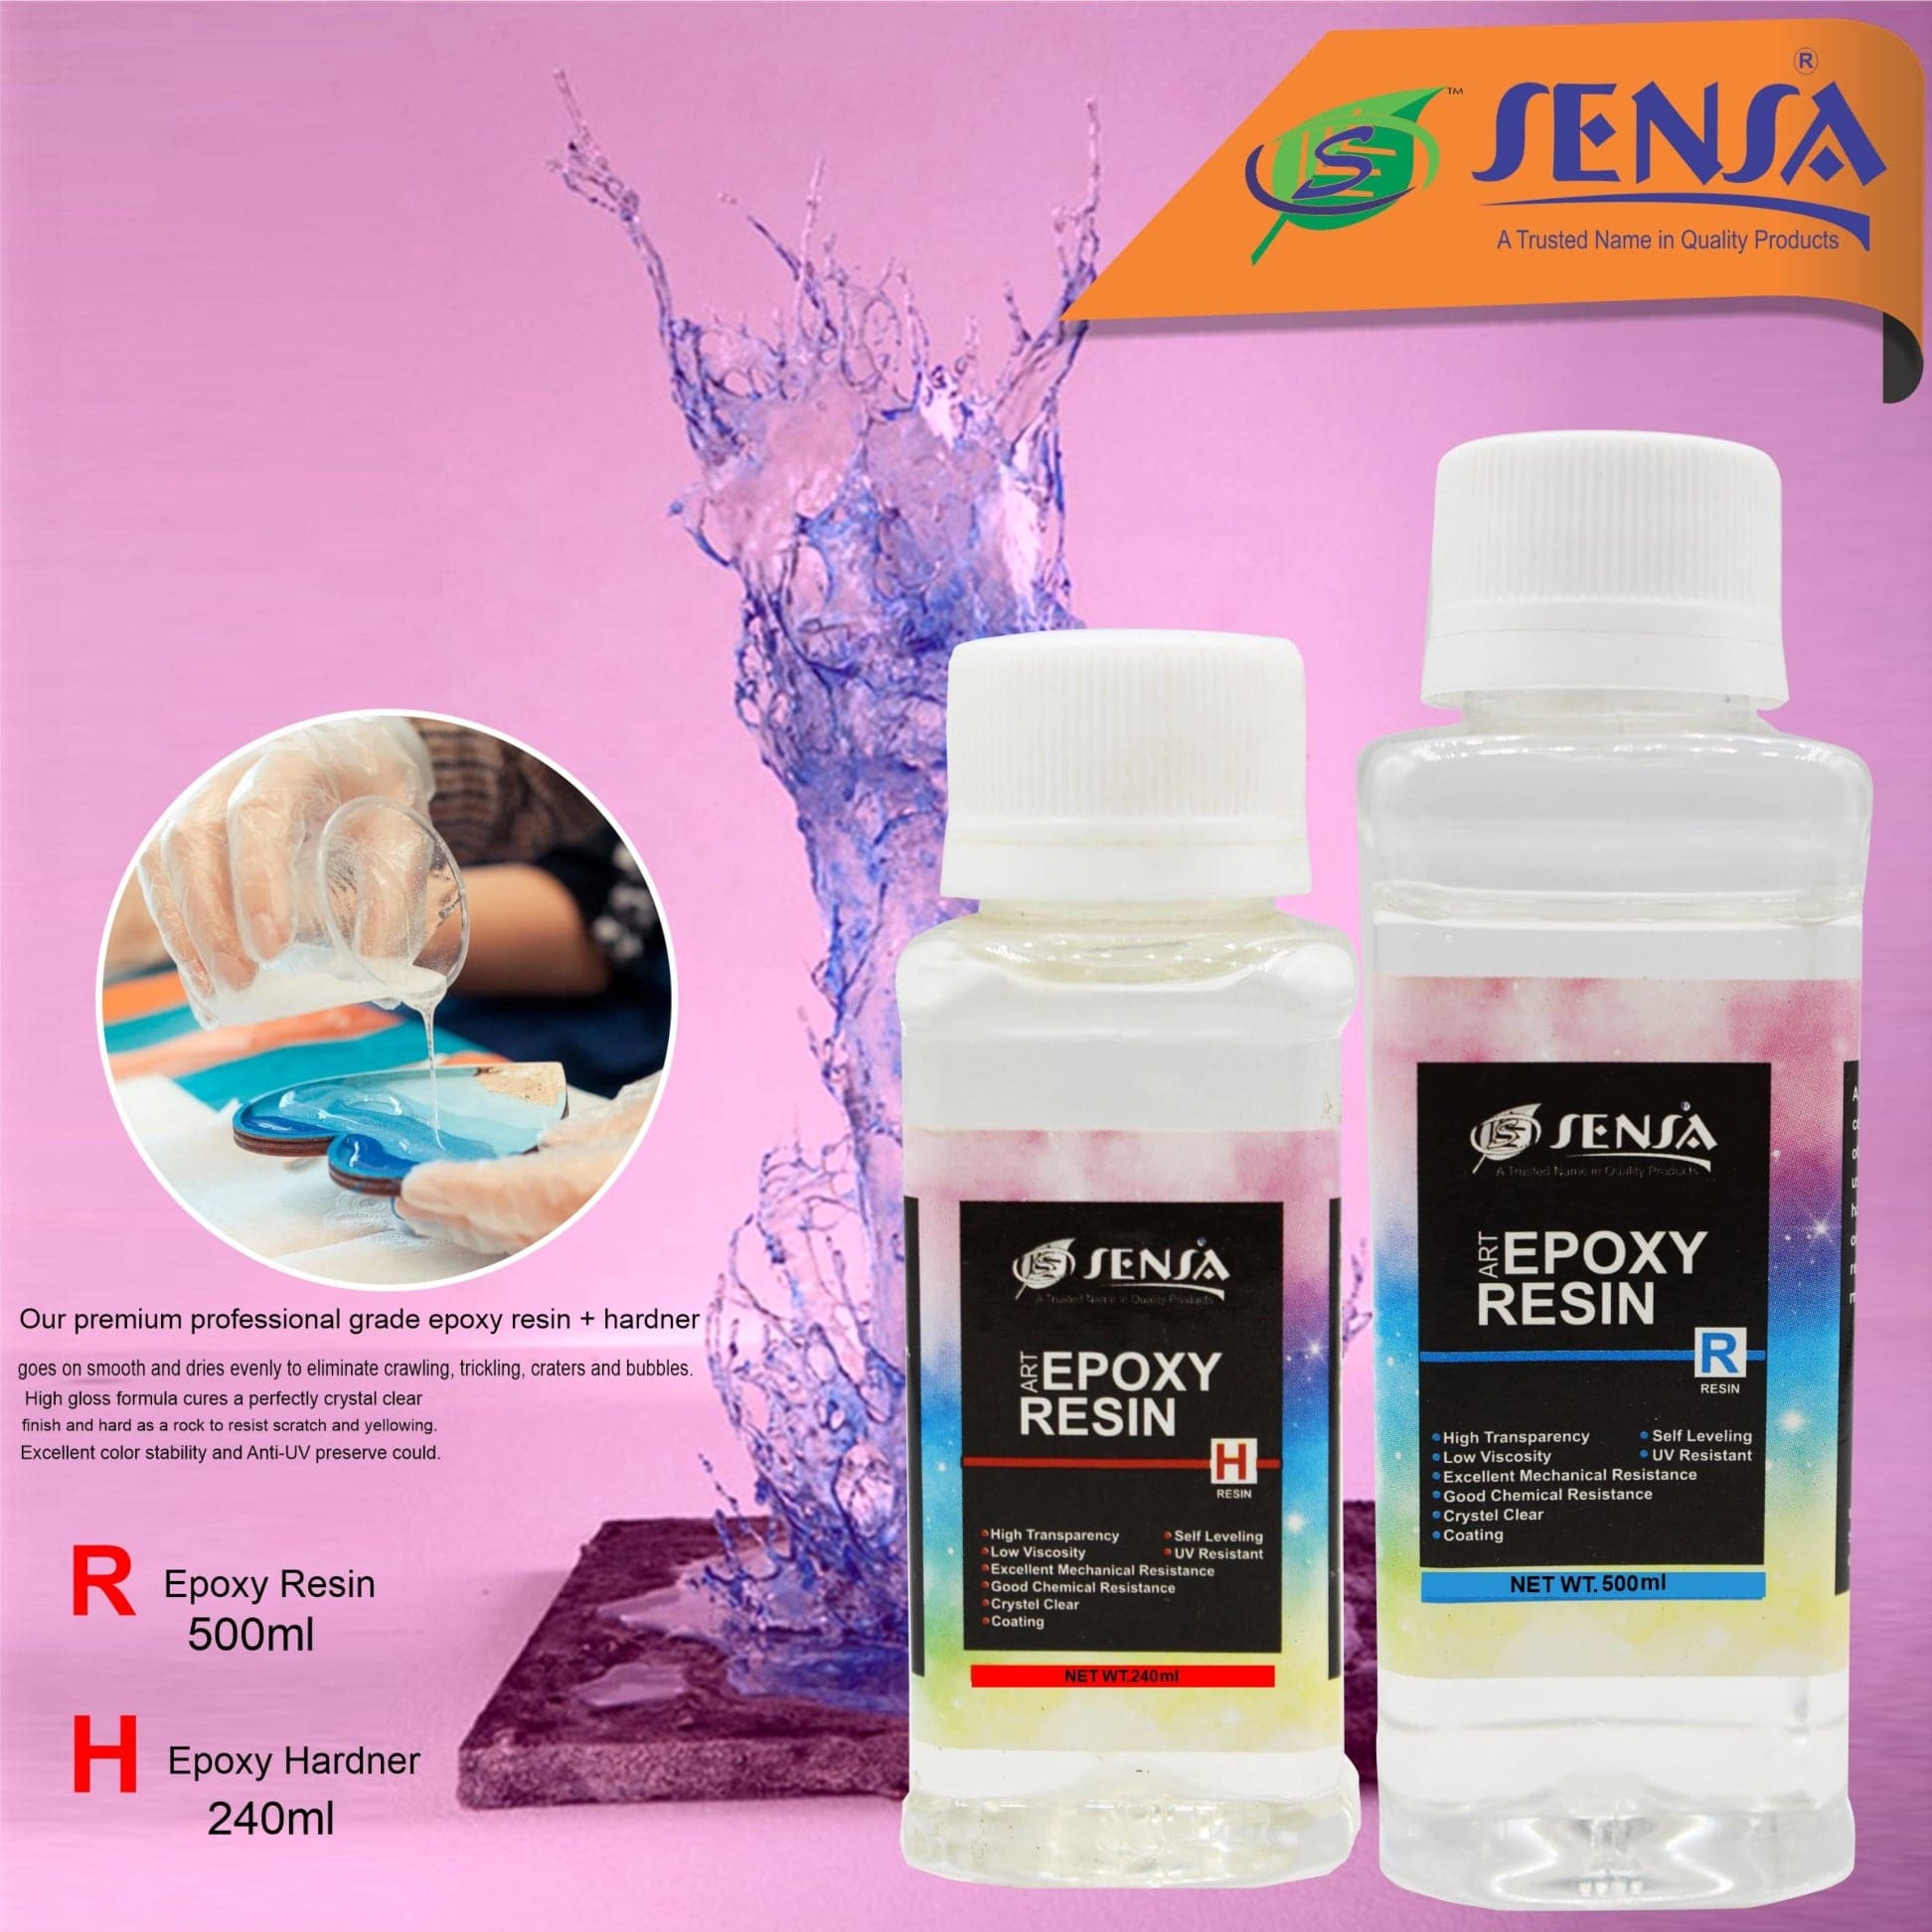 Sensa Epoxy Resin and Hardener